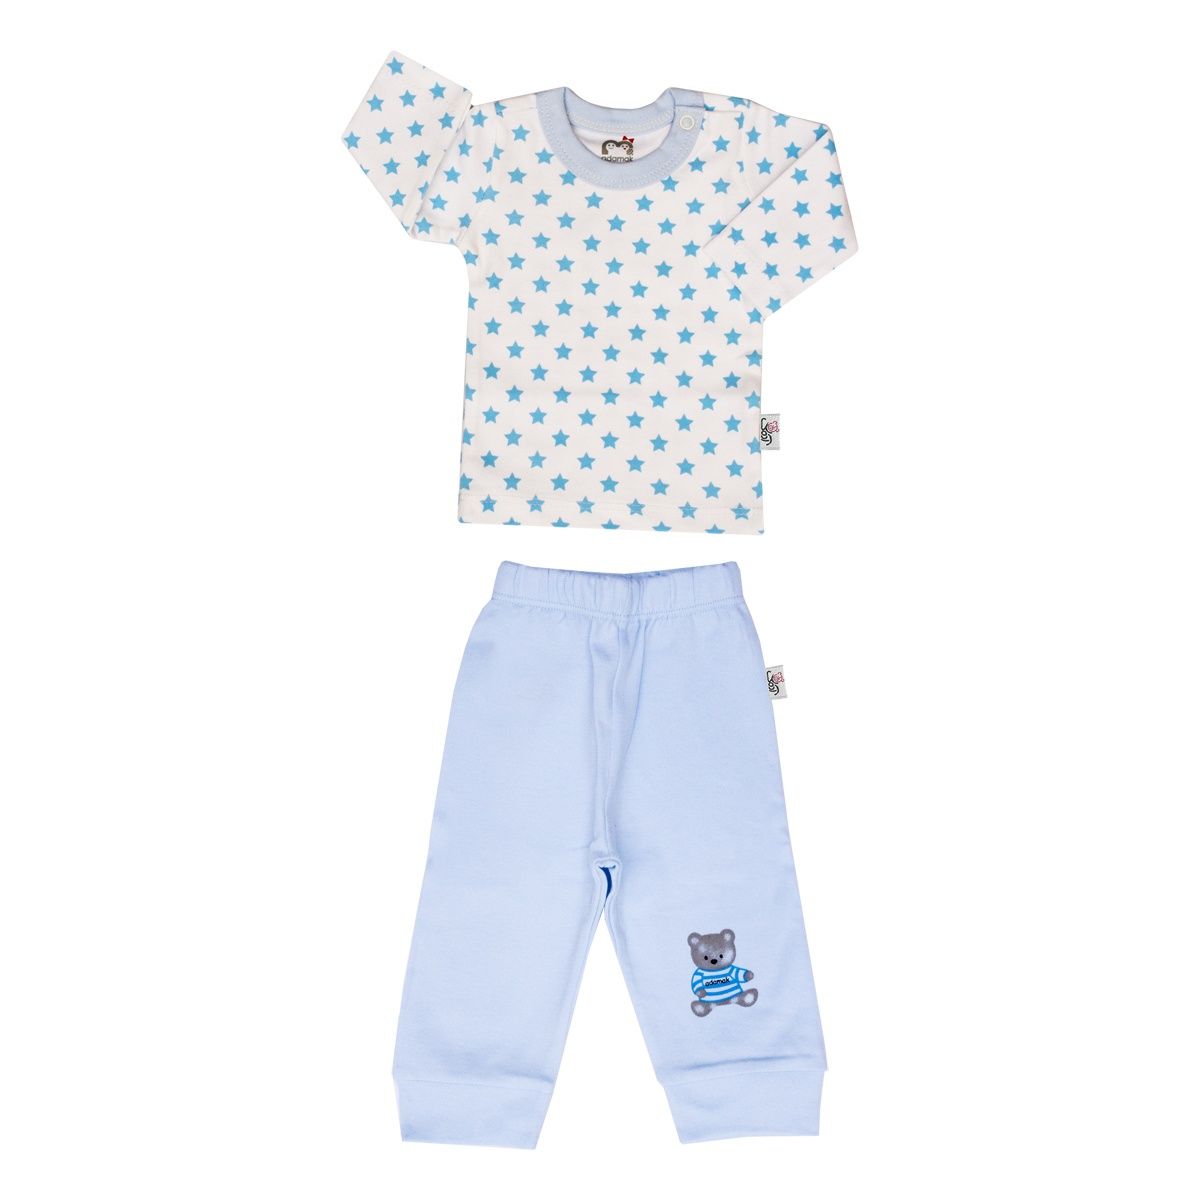 ست تی شرت و شلوار نوزادی پسرانه آدمک طرح ستاره آبی کد 04  -  - 1